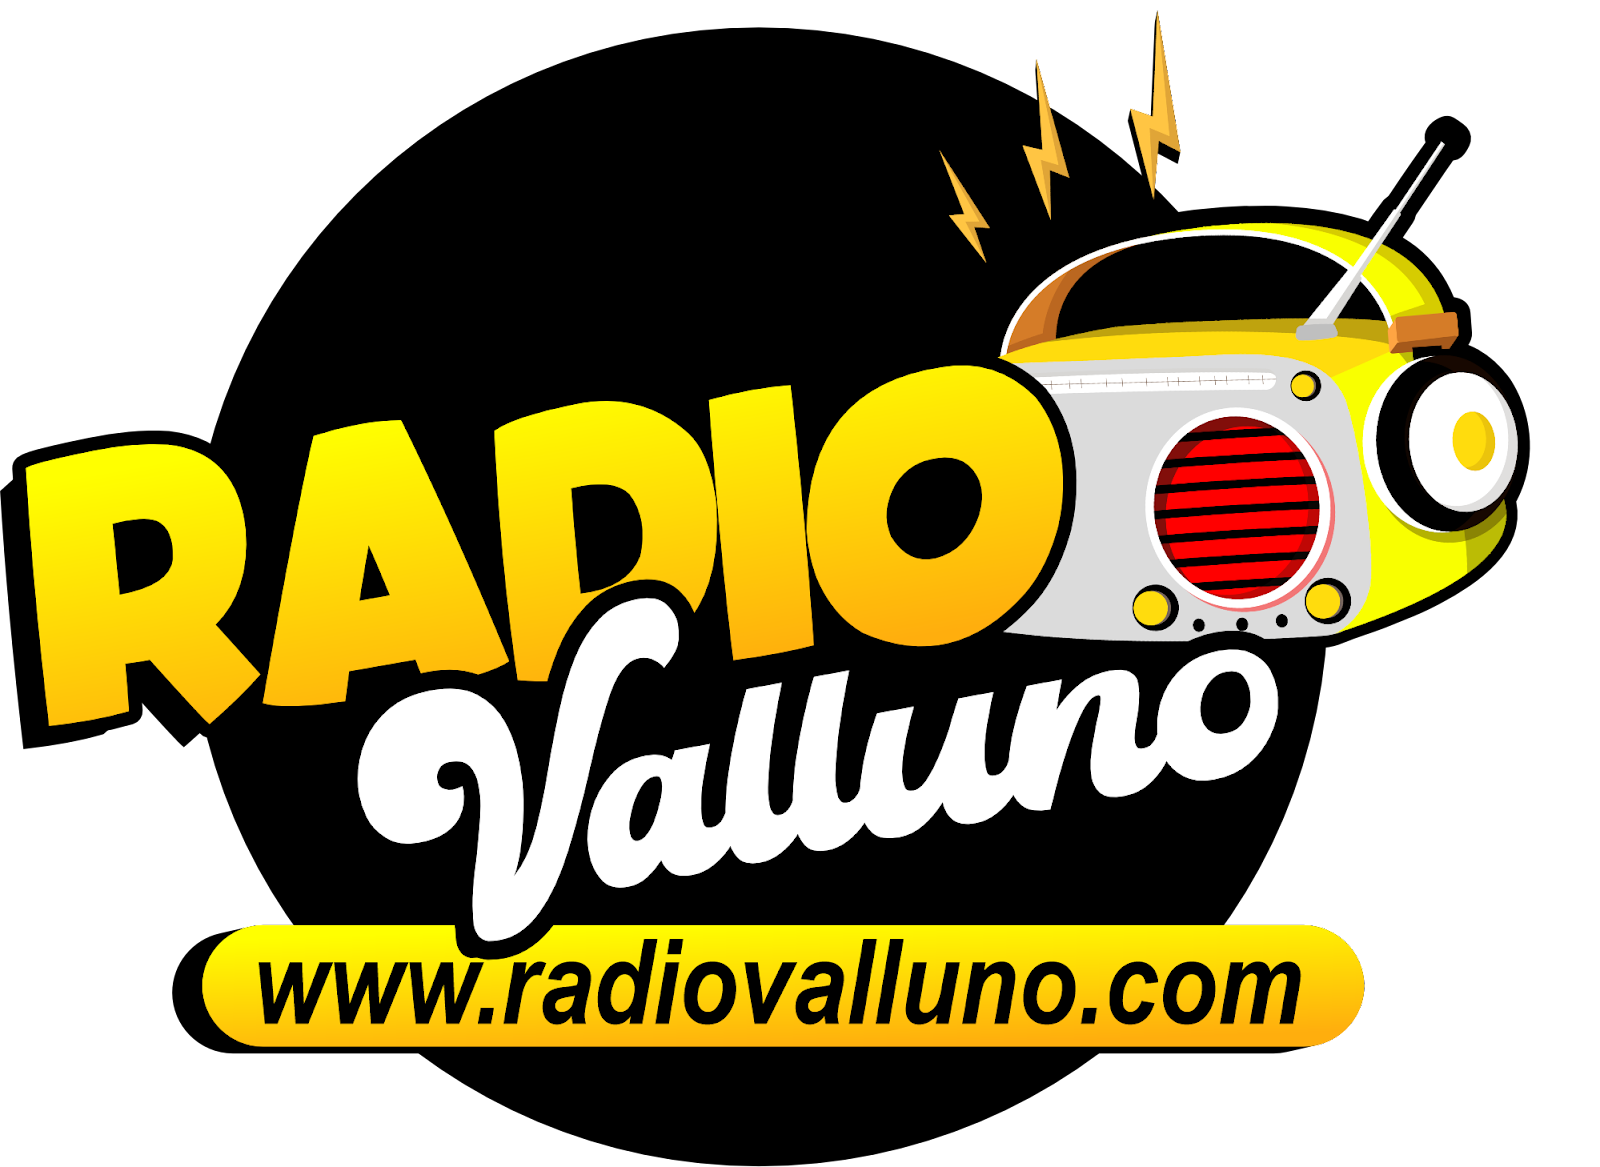 Emisora - Radio Valluno